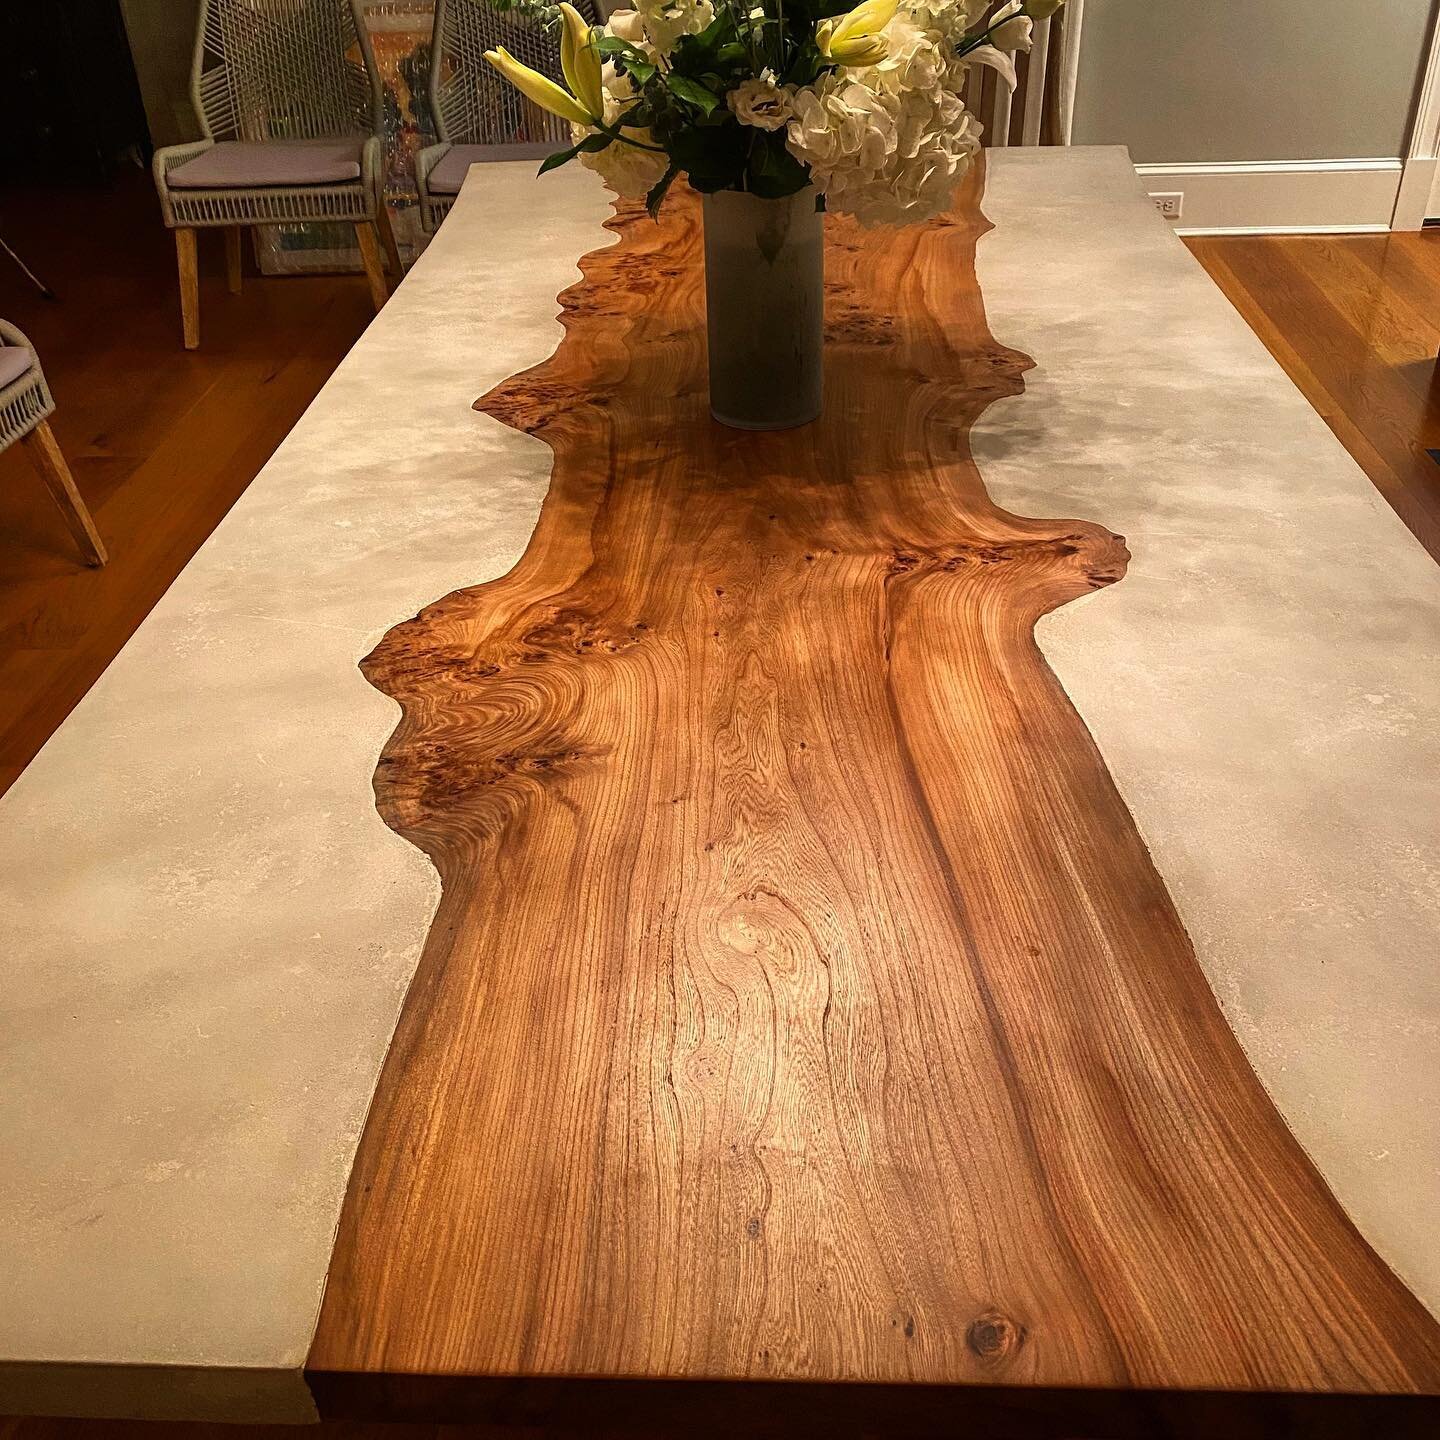 Burled elm and concrete dining table in its Nantucket home! #tbt #throwbackthursday #furniture #furnituredesign #design #interiordesign #table #diningroom #luxurydiningroom #luxurylife #artistsoninstagram #instagram #etsy #artisan #smallbusiness #woo